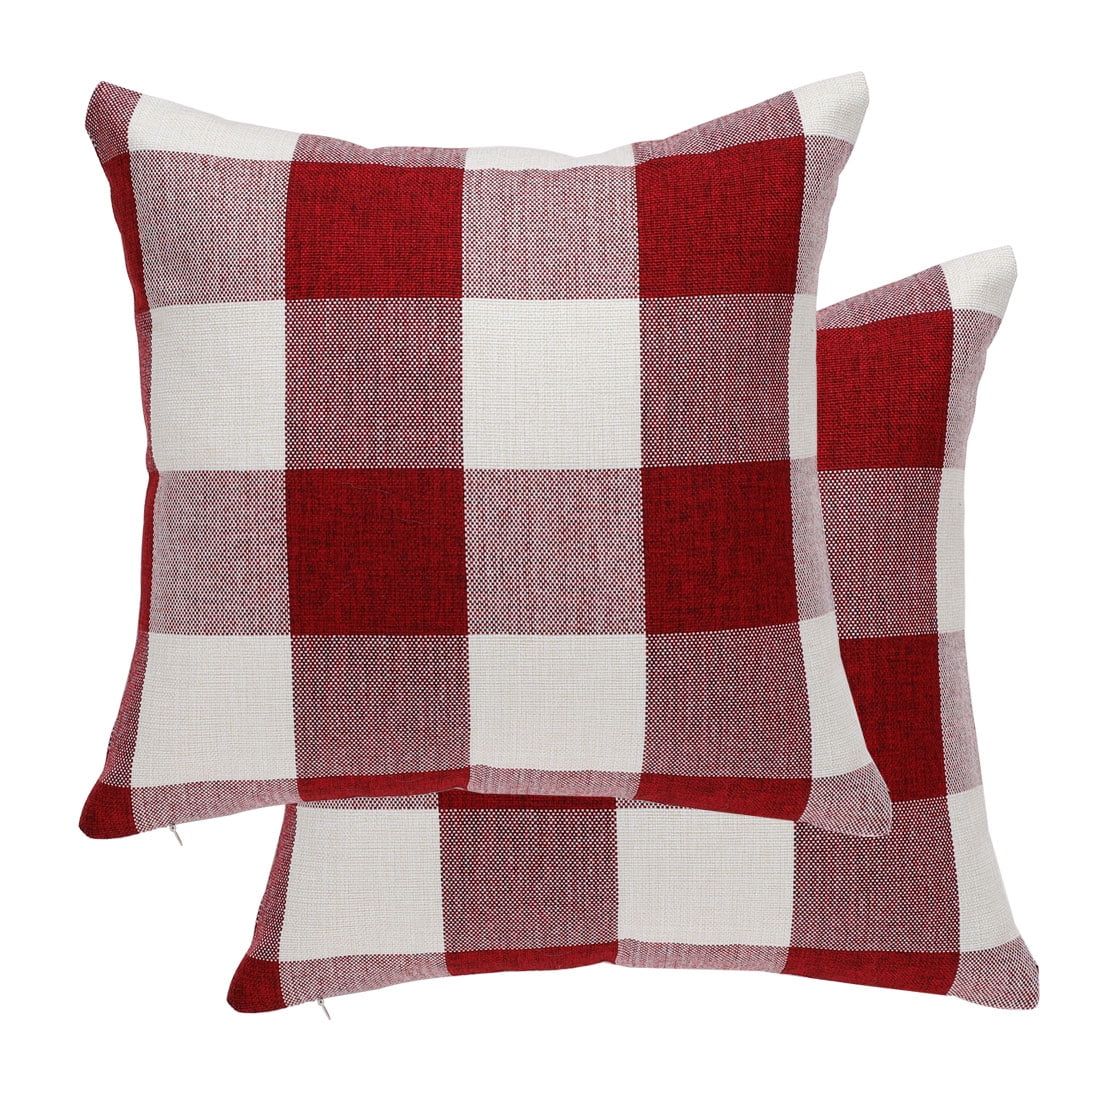 PiccoCasa Cotton Linen Retro Plaid Throw Pillow Covers 18"x18", Red, White, 2 Pack | Walmart (US)